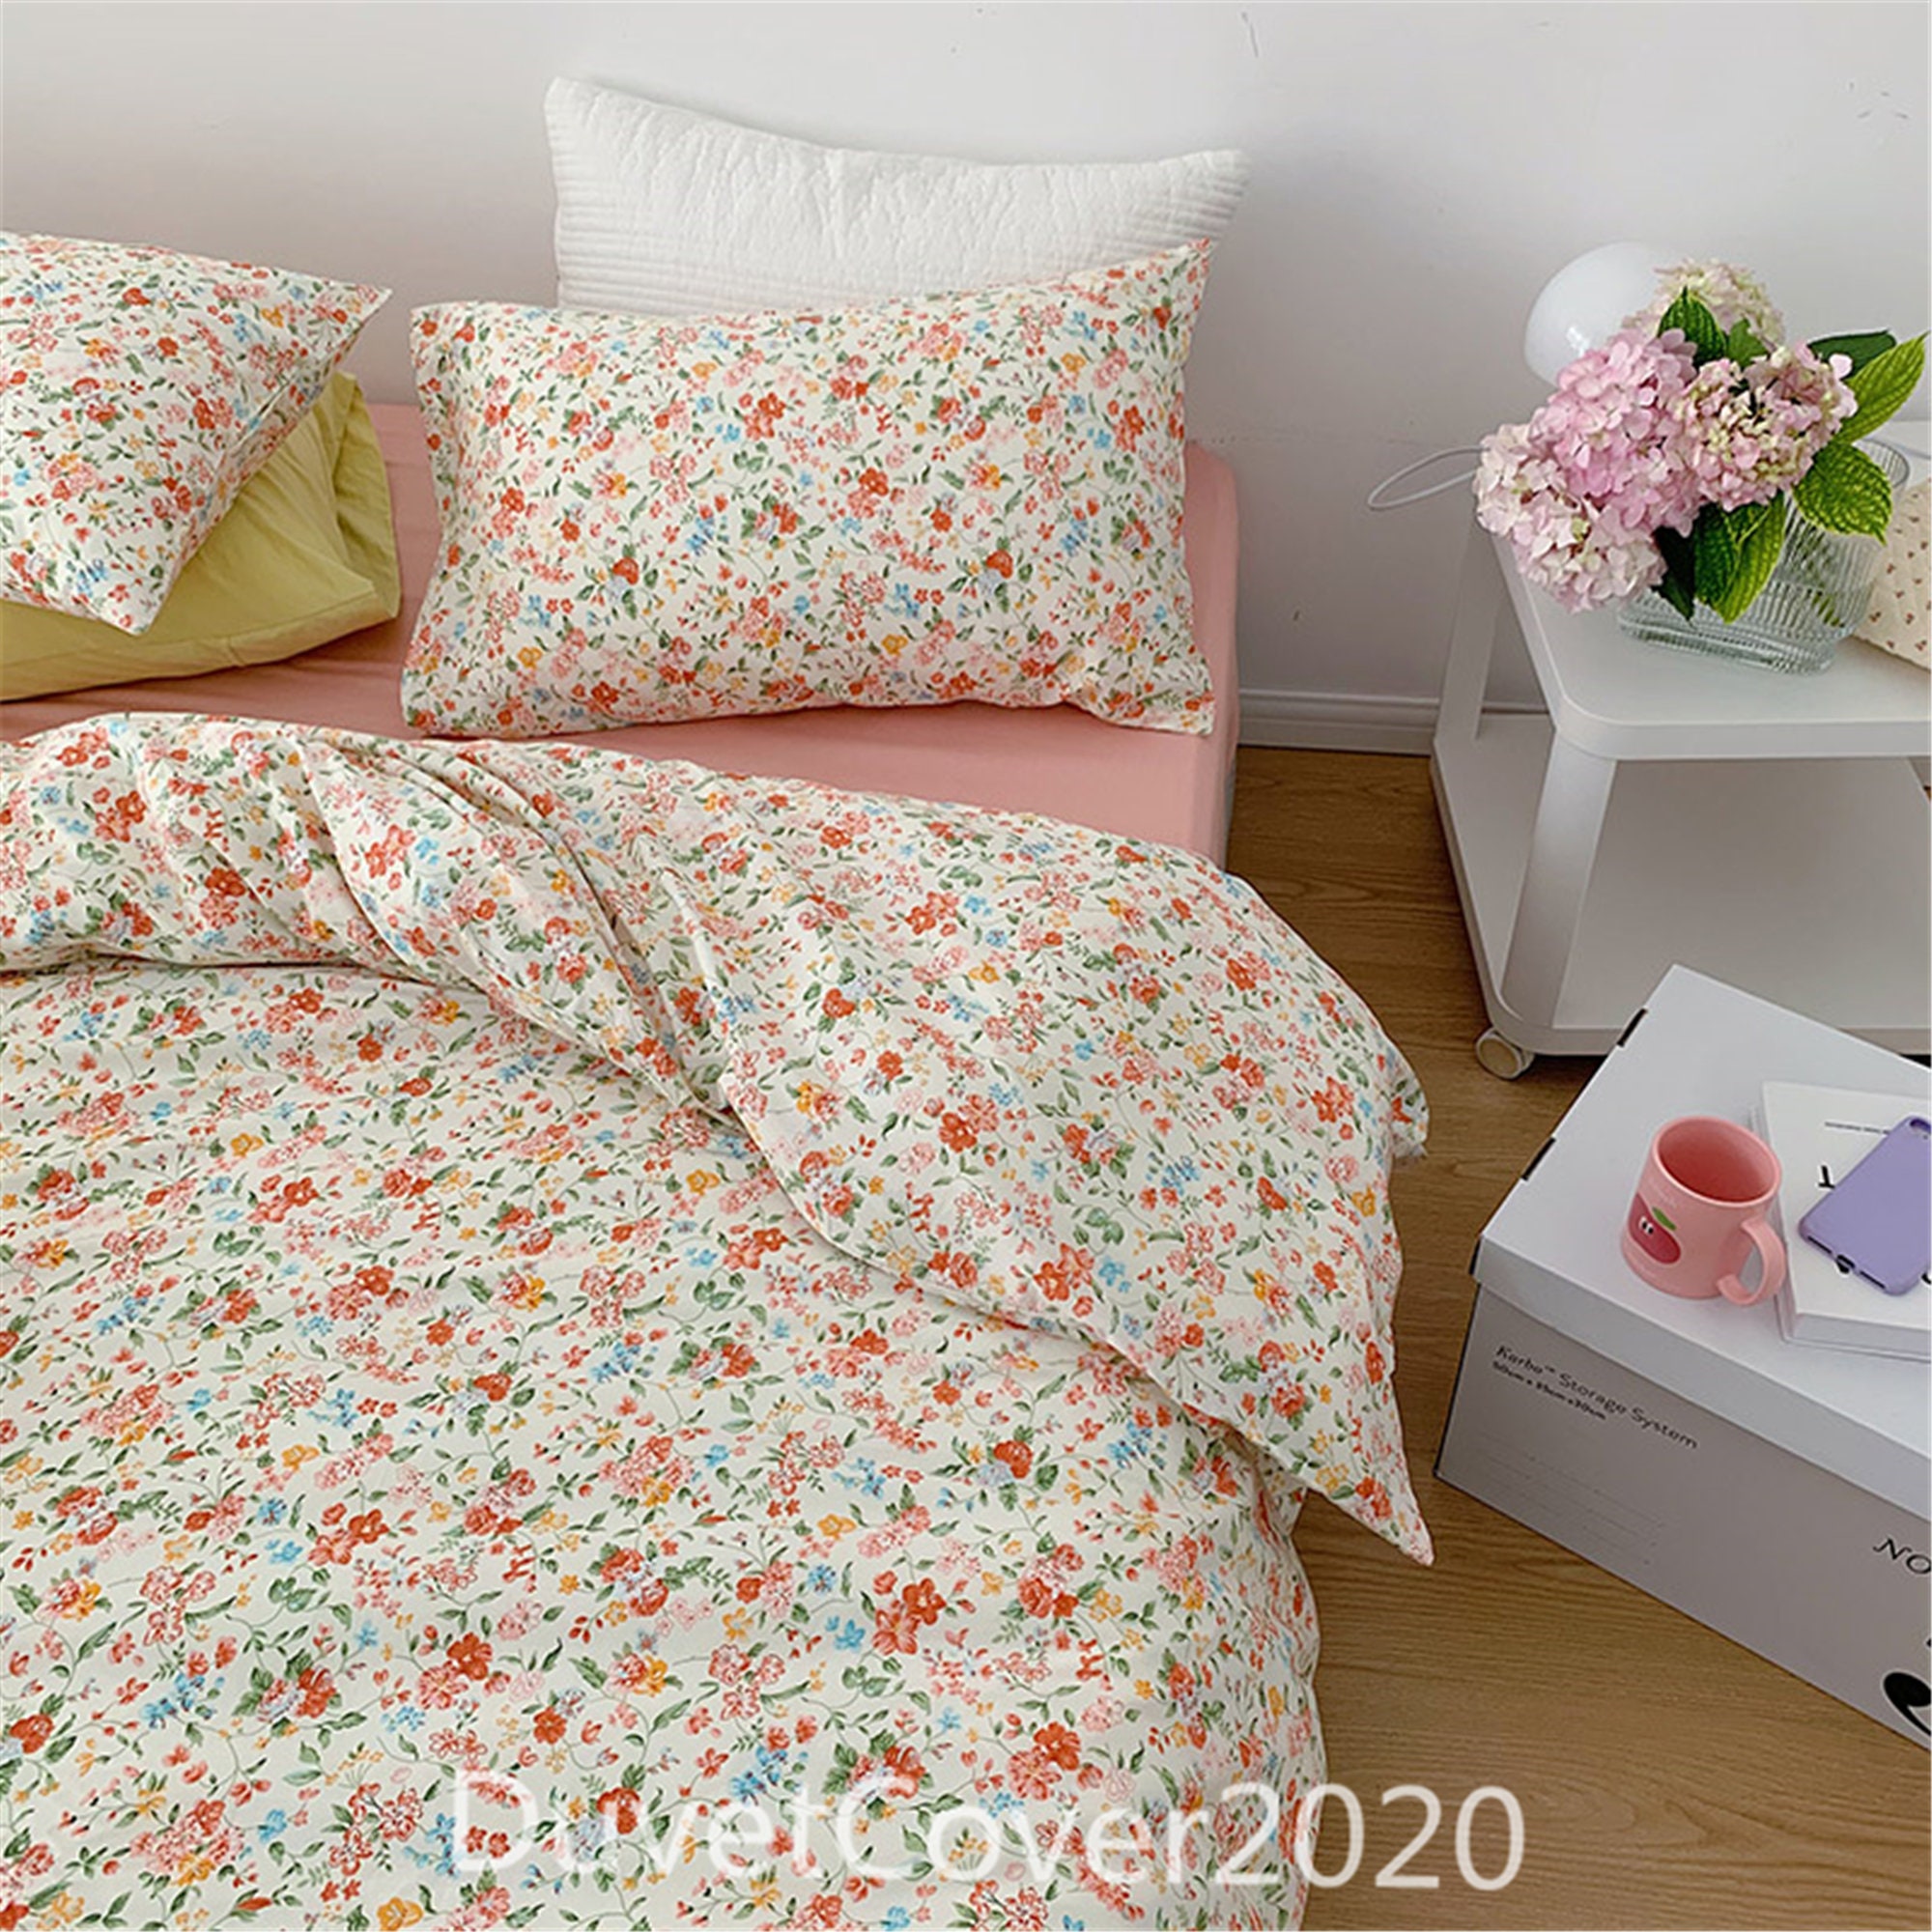 Luxury Quality 100% Cotton Soft Quilt Duvet Cover and Pillowcase Set Bedding Set 